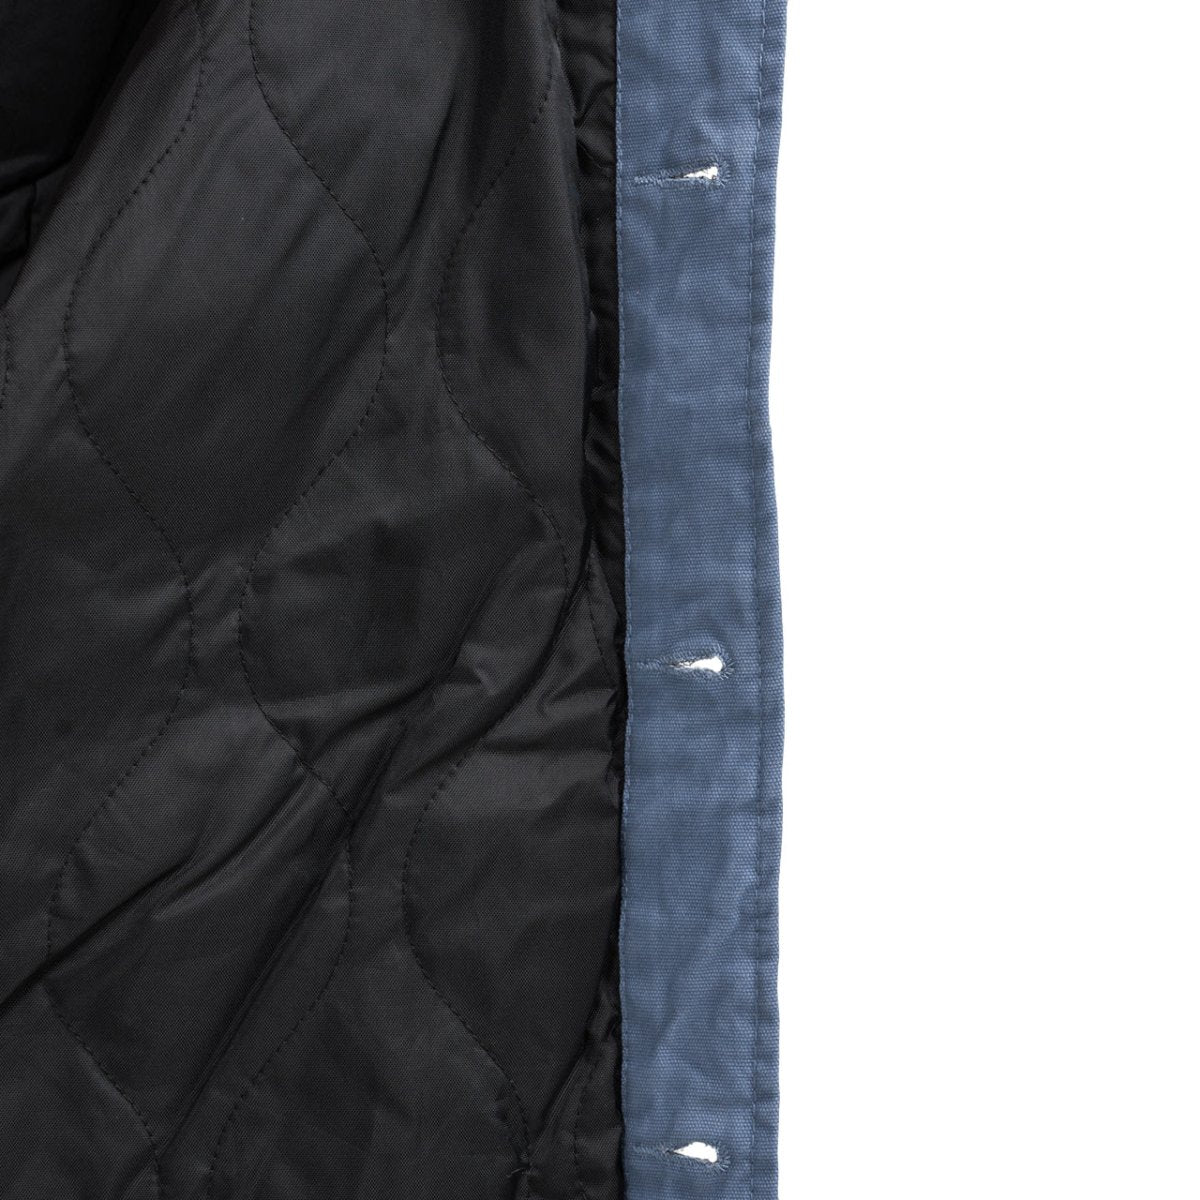 Stüssy Quilted Chore Coat (Blau)  - Allike Store